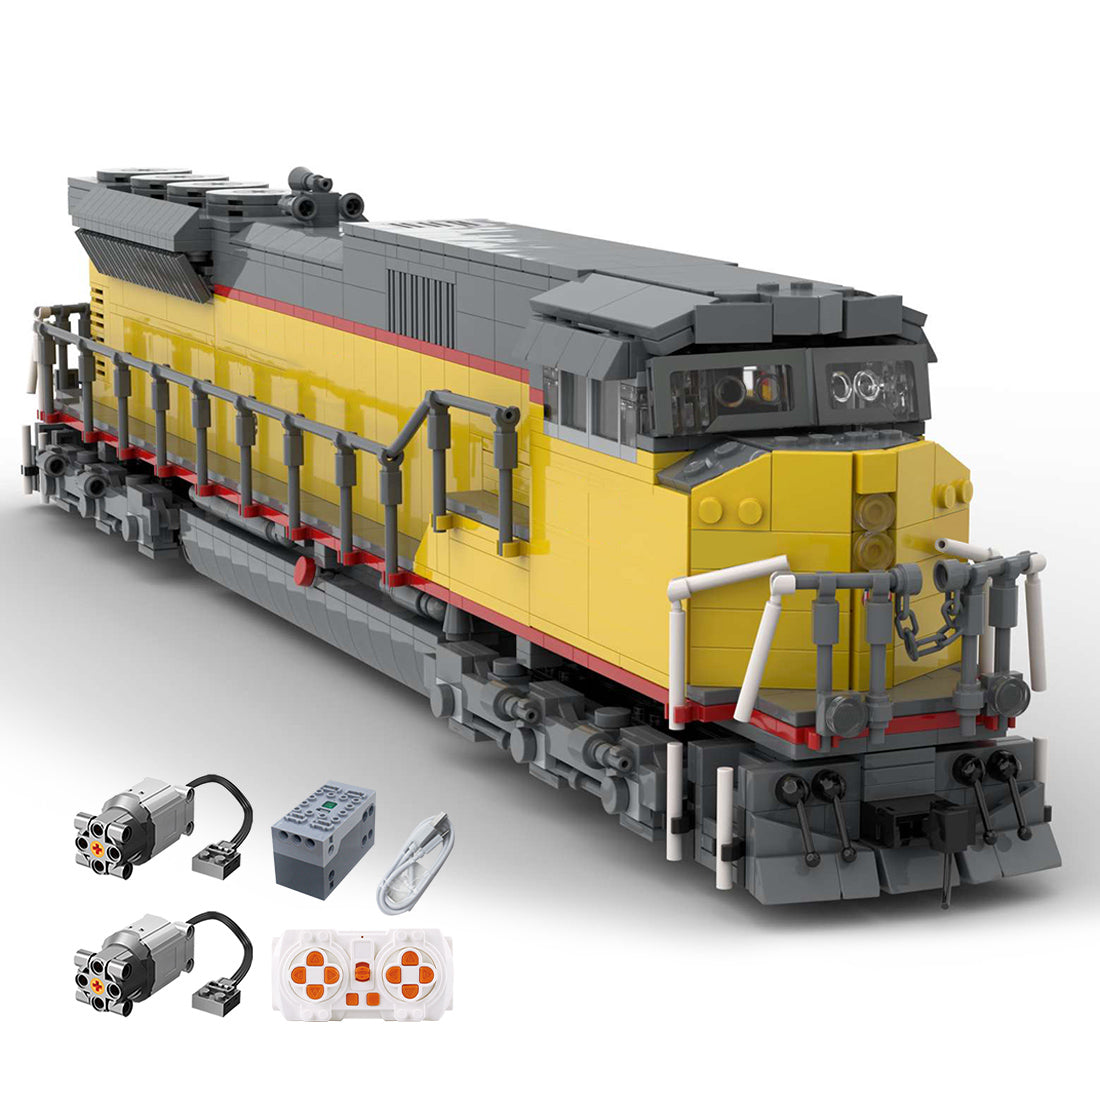 MOC-125310 EMD-SD90/43MAC Union Pacific Train Model Building Block Set 2241PCS